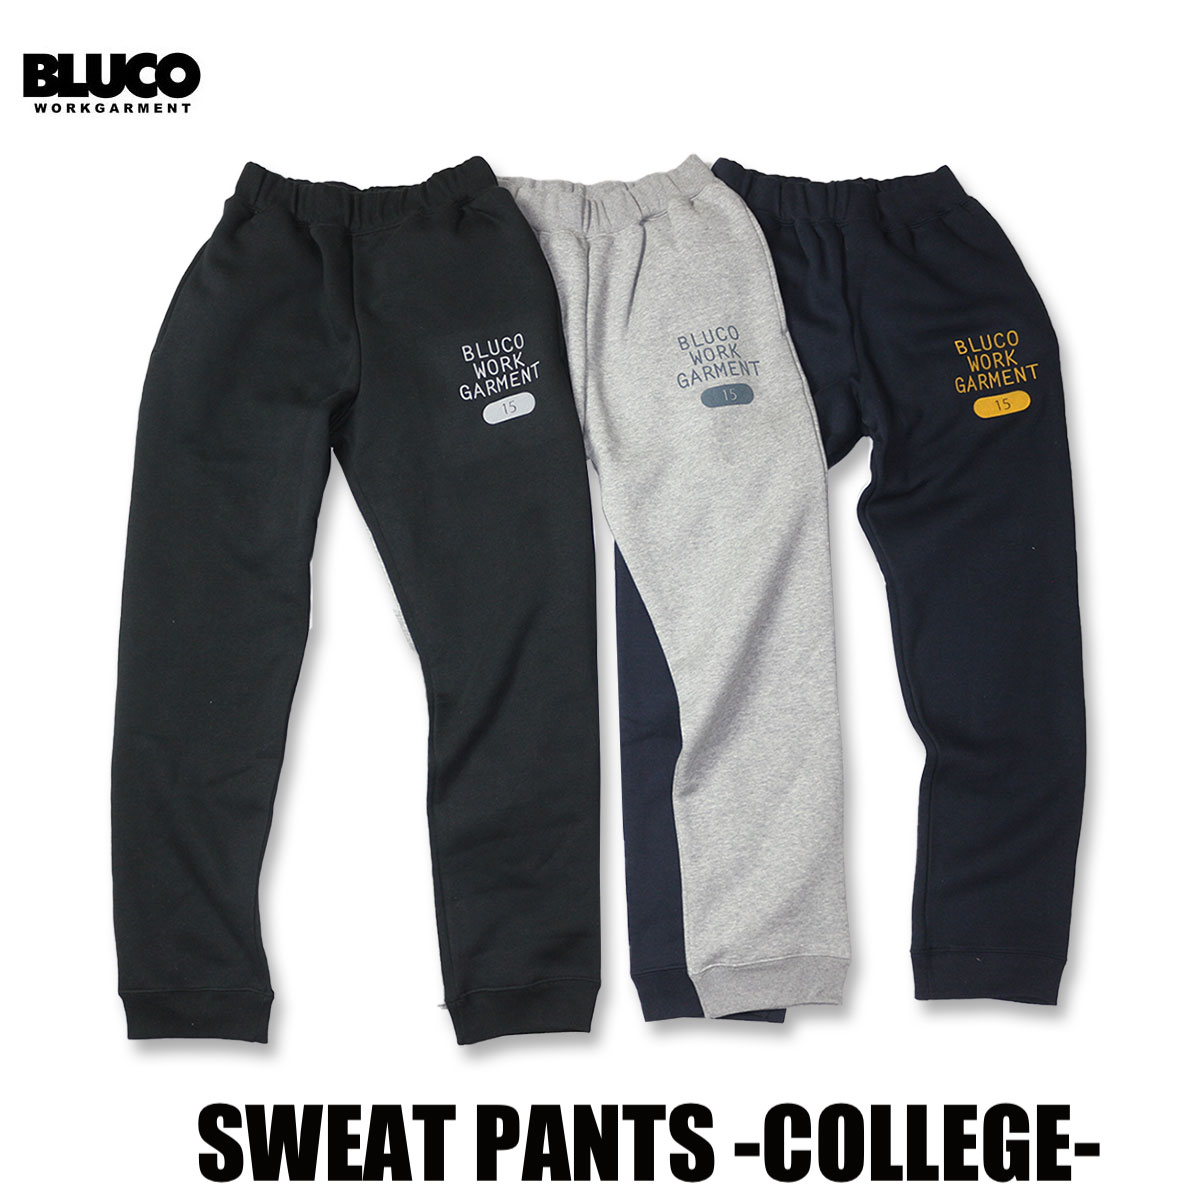 BLUCO(ブルコ) OL-916-022 SWEAT PANTS -COLLEGE- 3色(ASH/BLK/NVY)☆送料無料☆  :916-022:Pins store 通販 